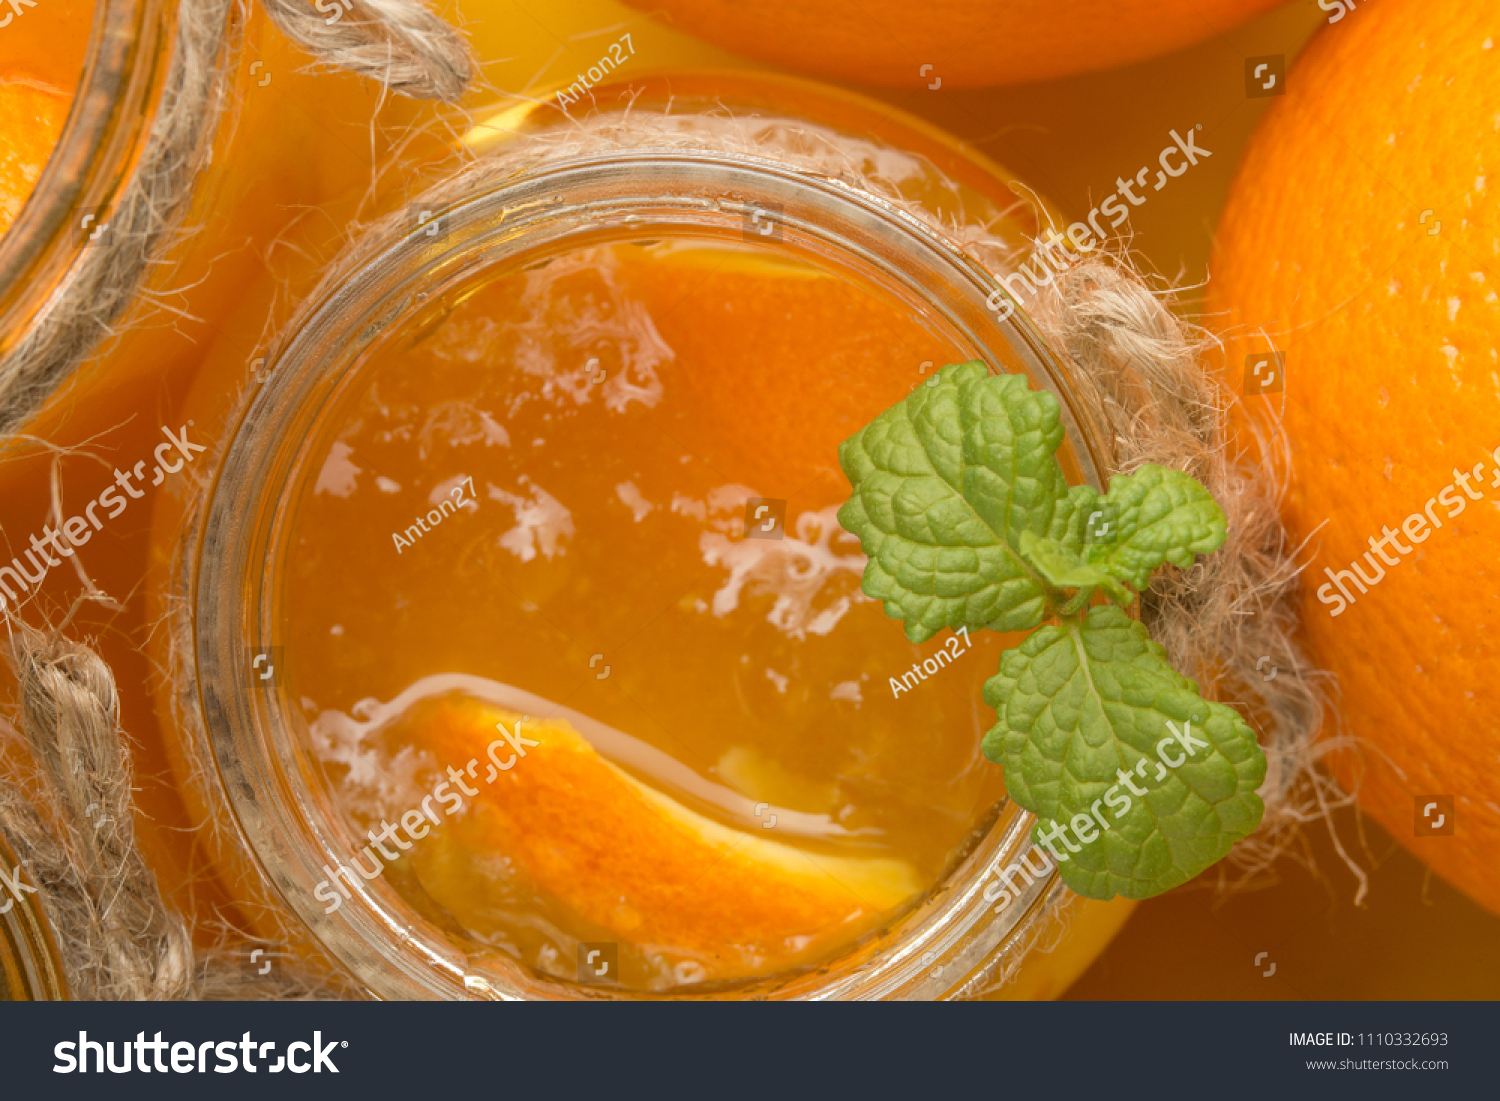 Download Orange Jam Glass Jar On Yellow Stock Photo Edit Now 1110332693 PSD Mockup Templates